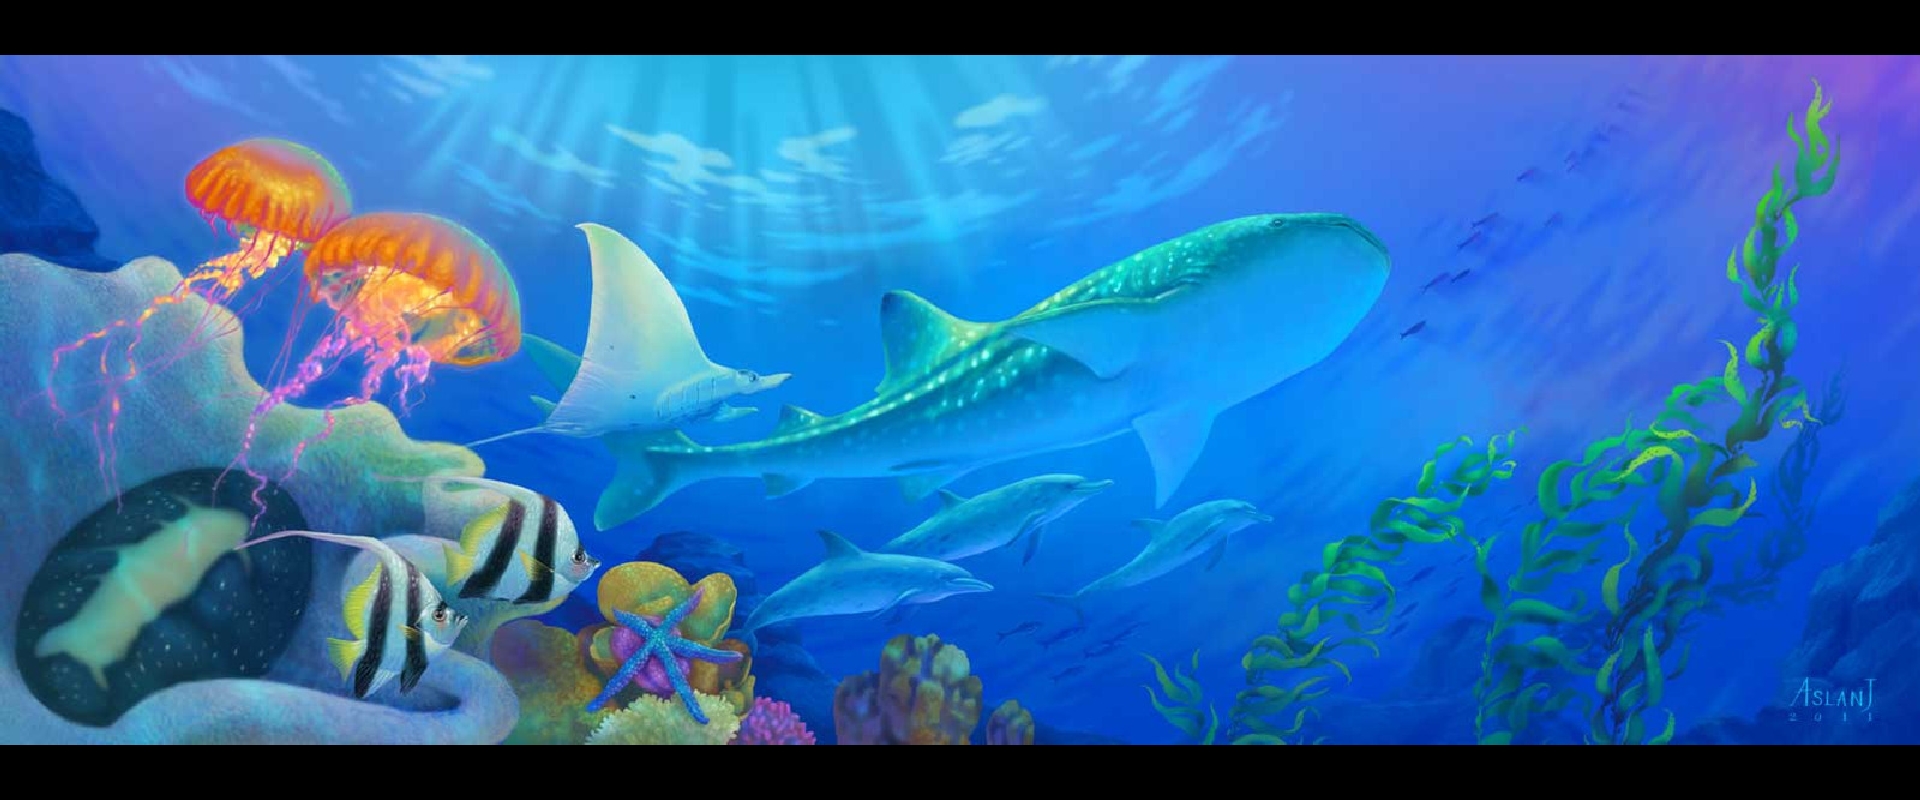 Ultrawide Wallpapers Underwater 